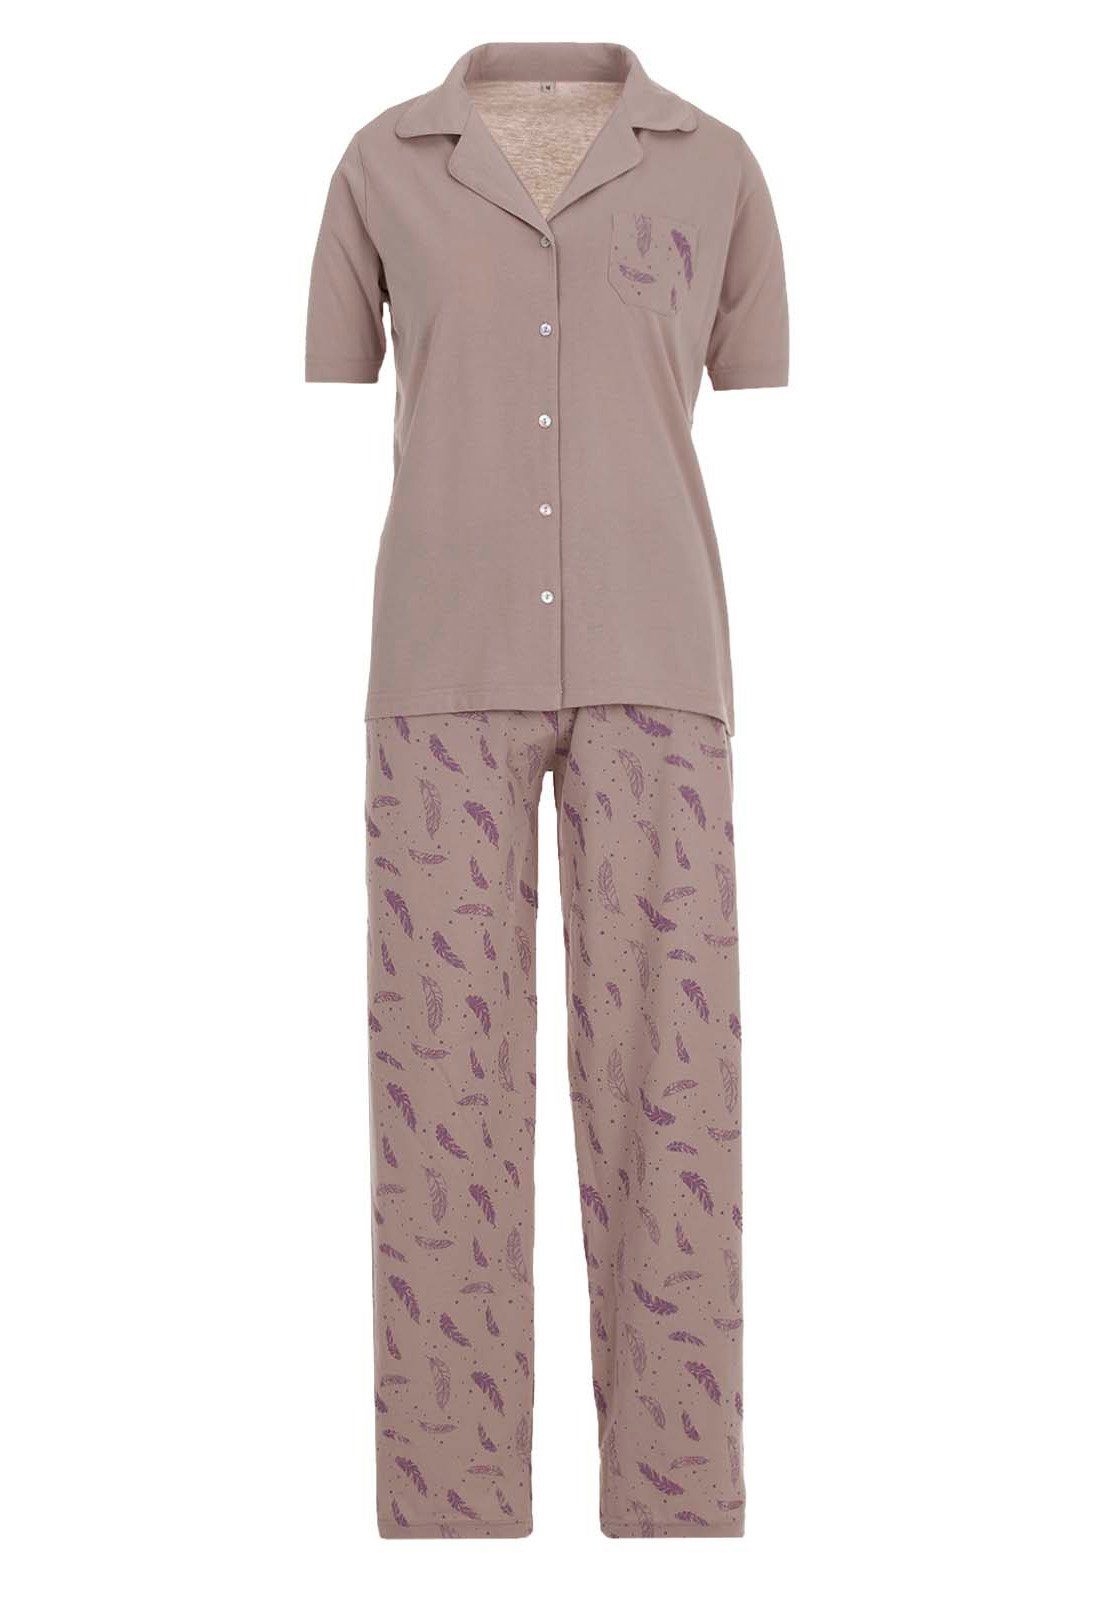 zeitlos Schlafanzug Pyjama Set Kurzarm sand - Feder